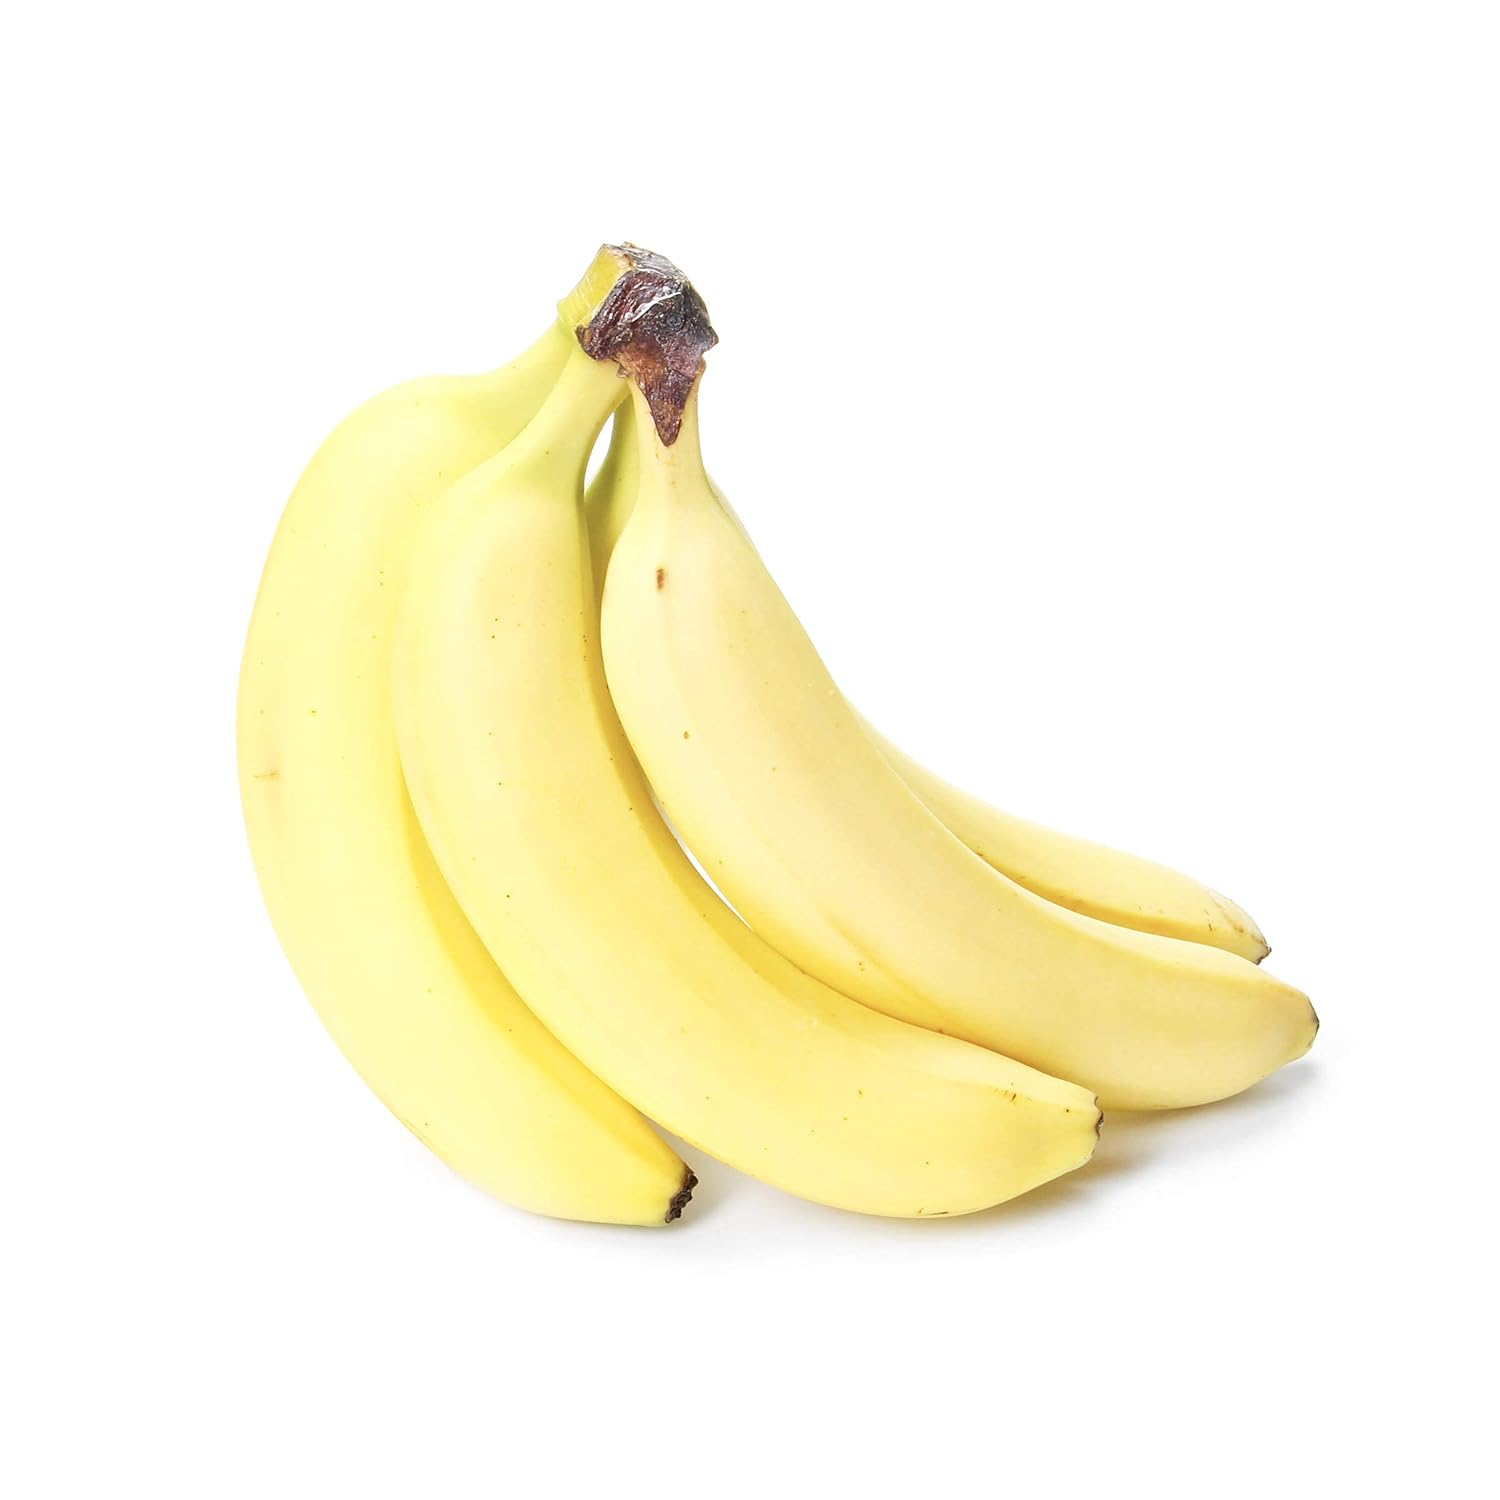 #1 Best Organic Banana Review